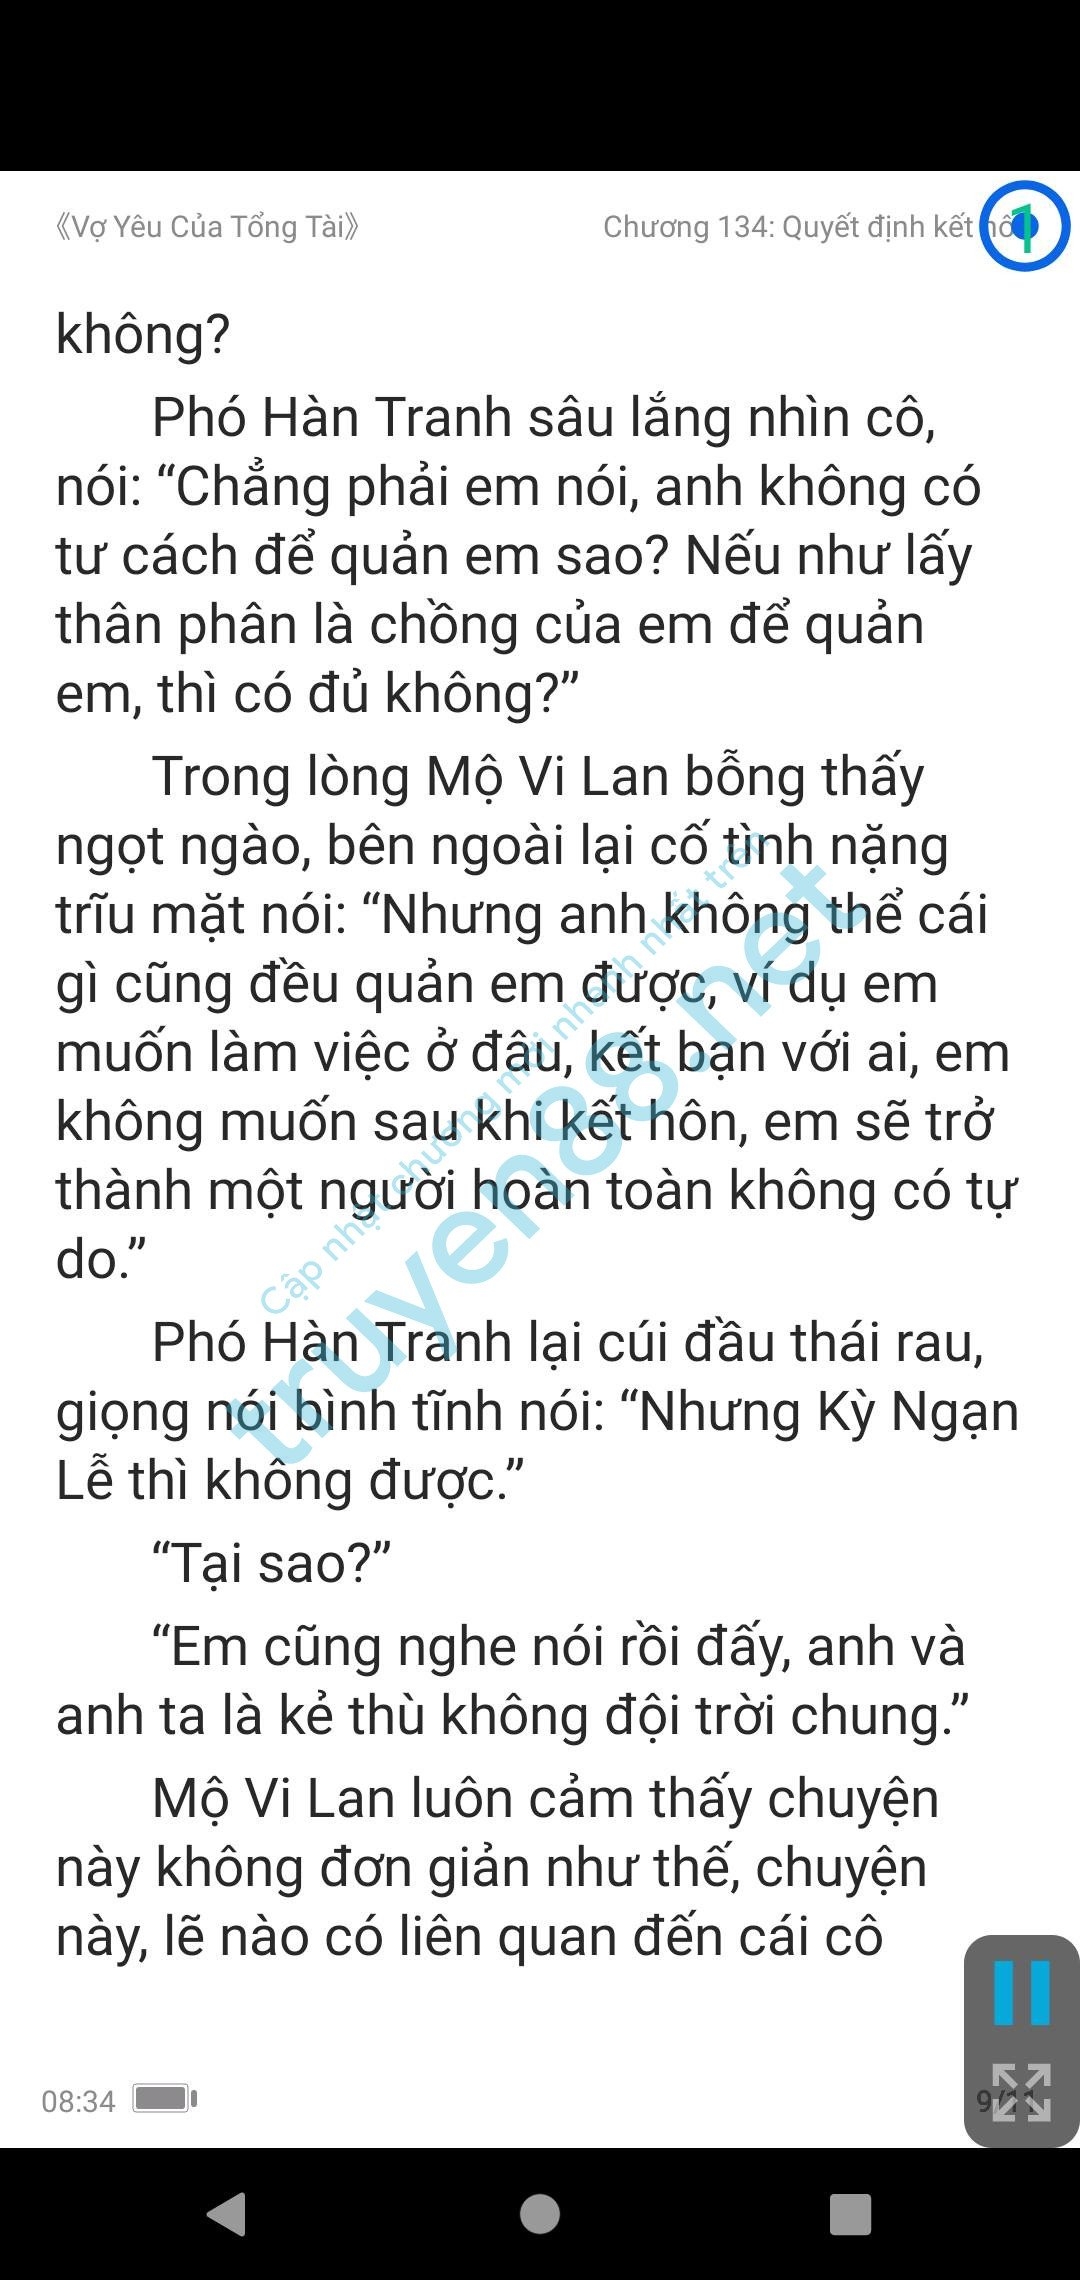 vo-yeu-cua-tong-tai-mo-vi-lan--pho-han-tranh-134-1